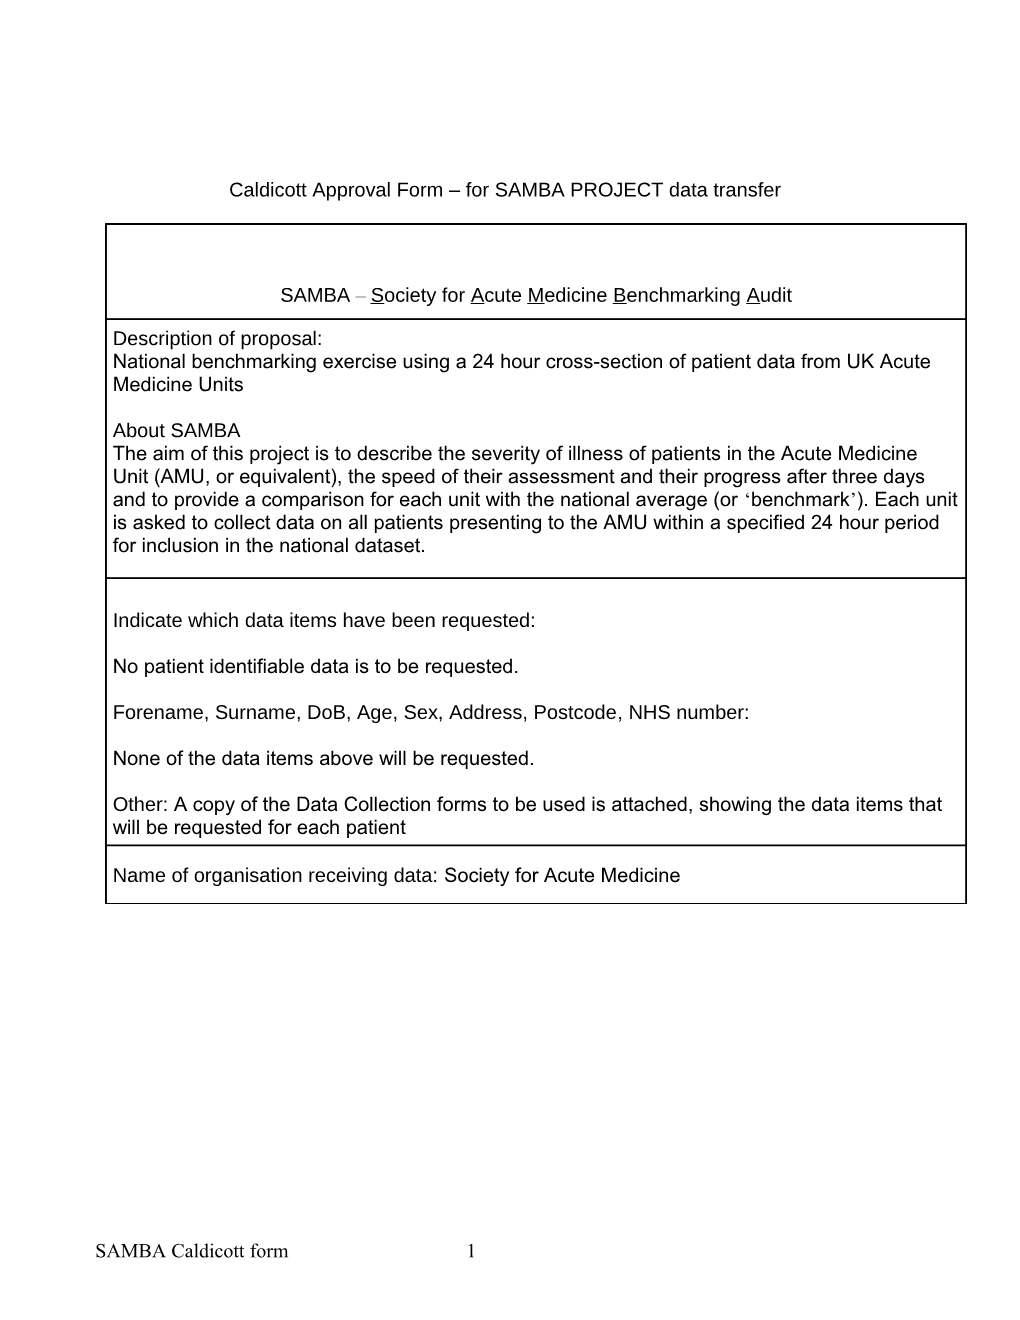 Caldicott Approval Form for SAMBA PROJECT Data Transfer